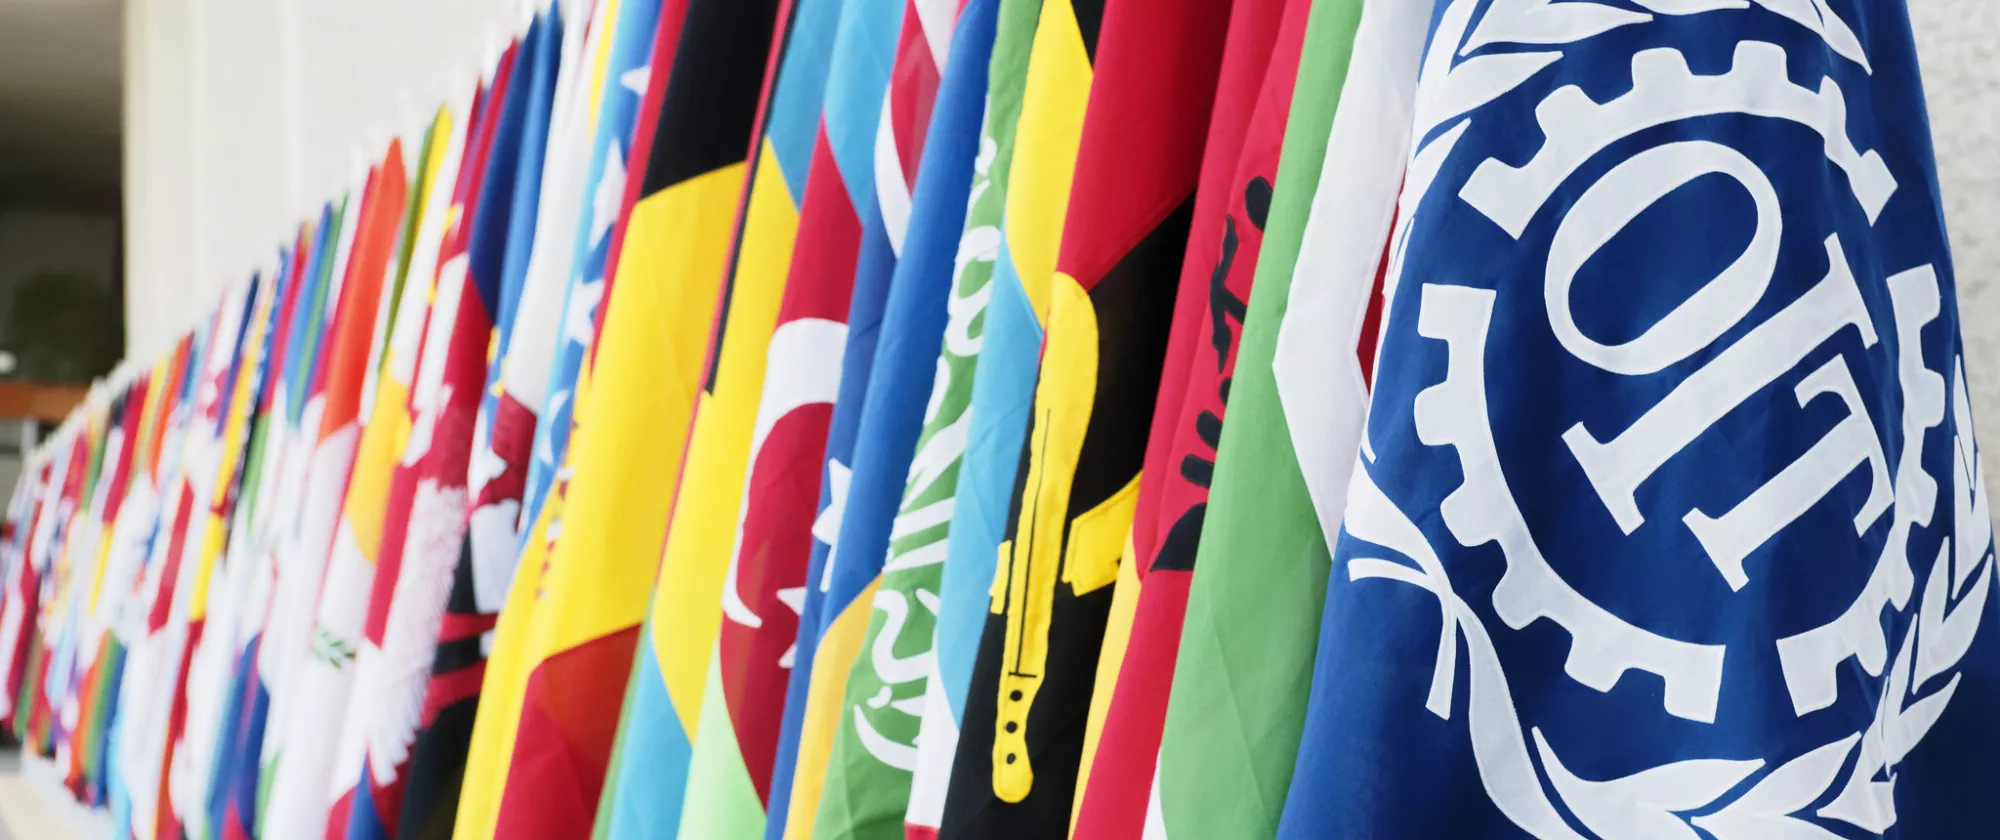 ILO member States flags